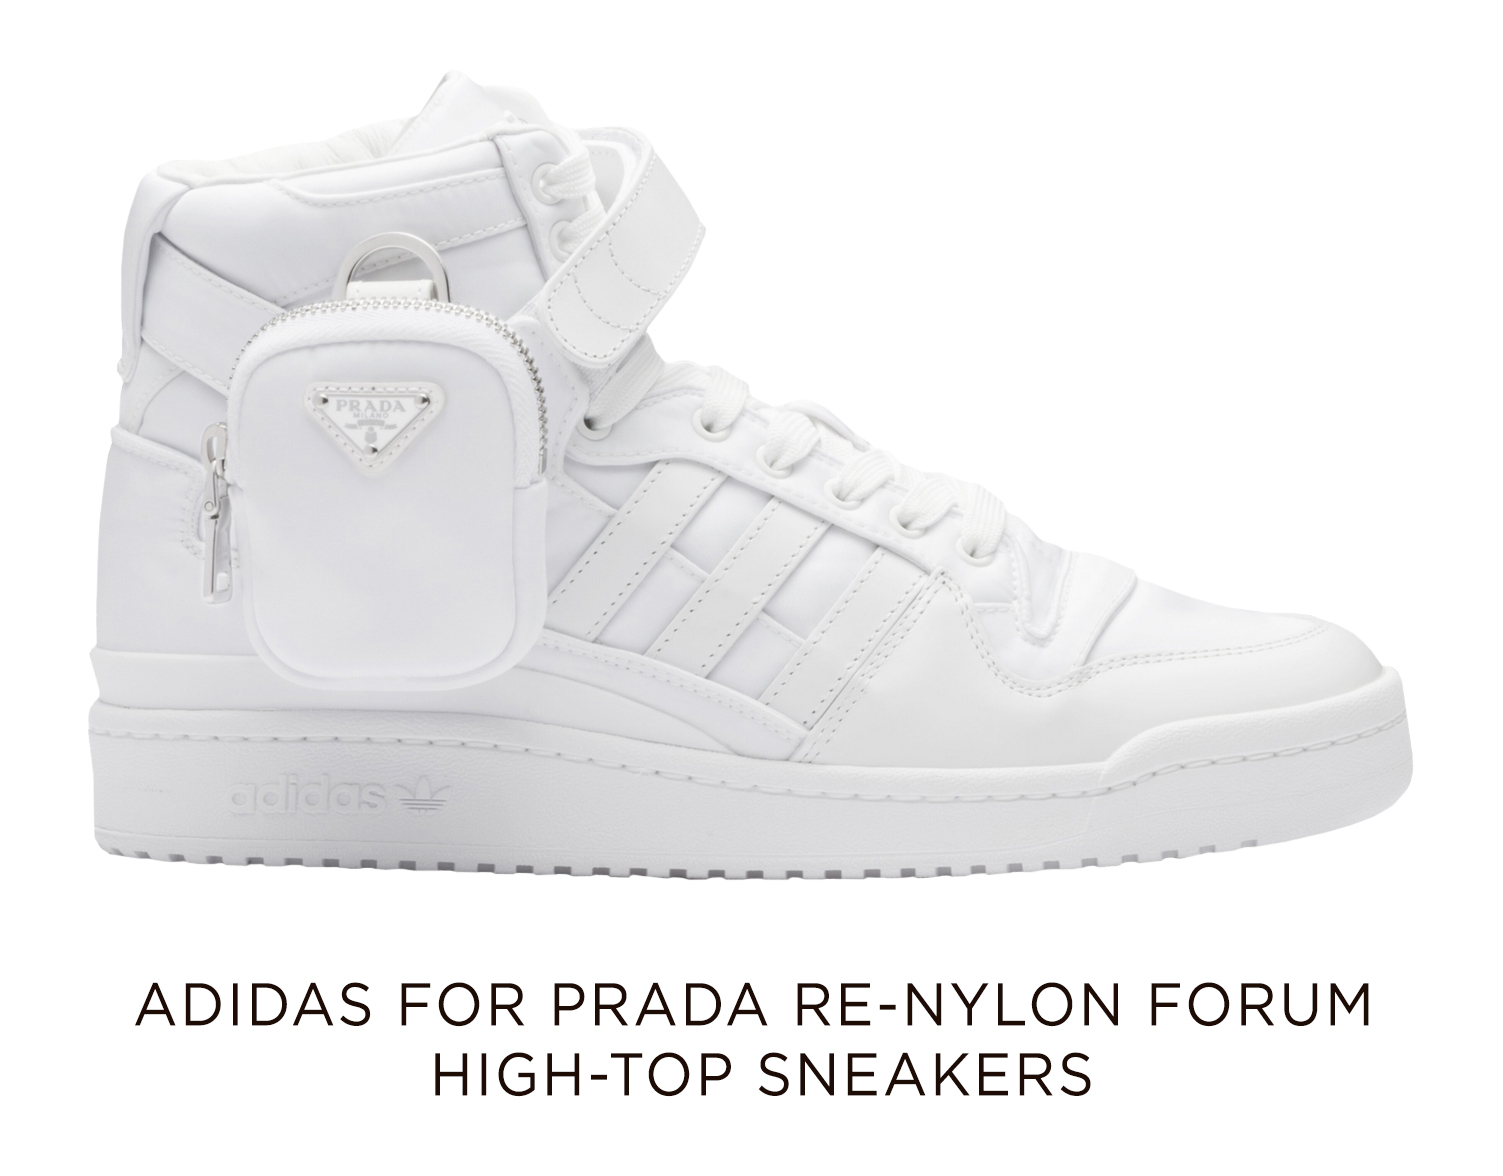 Adidas for Prada Re-Nylon: Luxury Sportswear, Reimagined